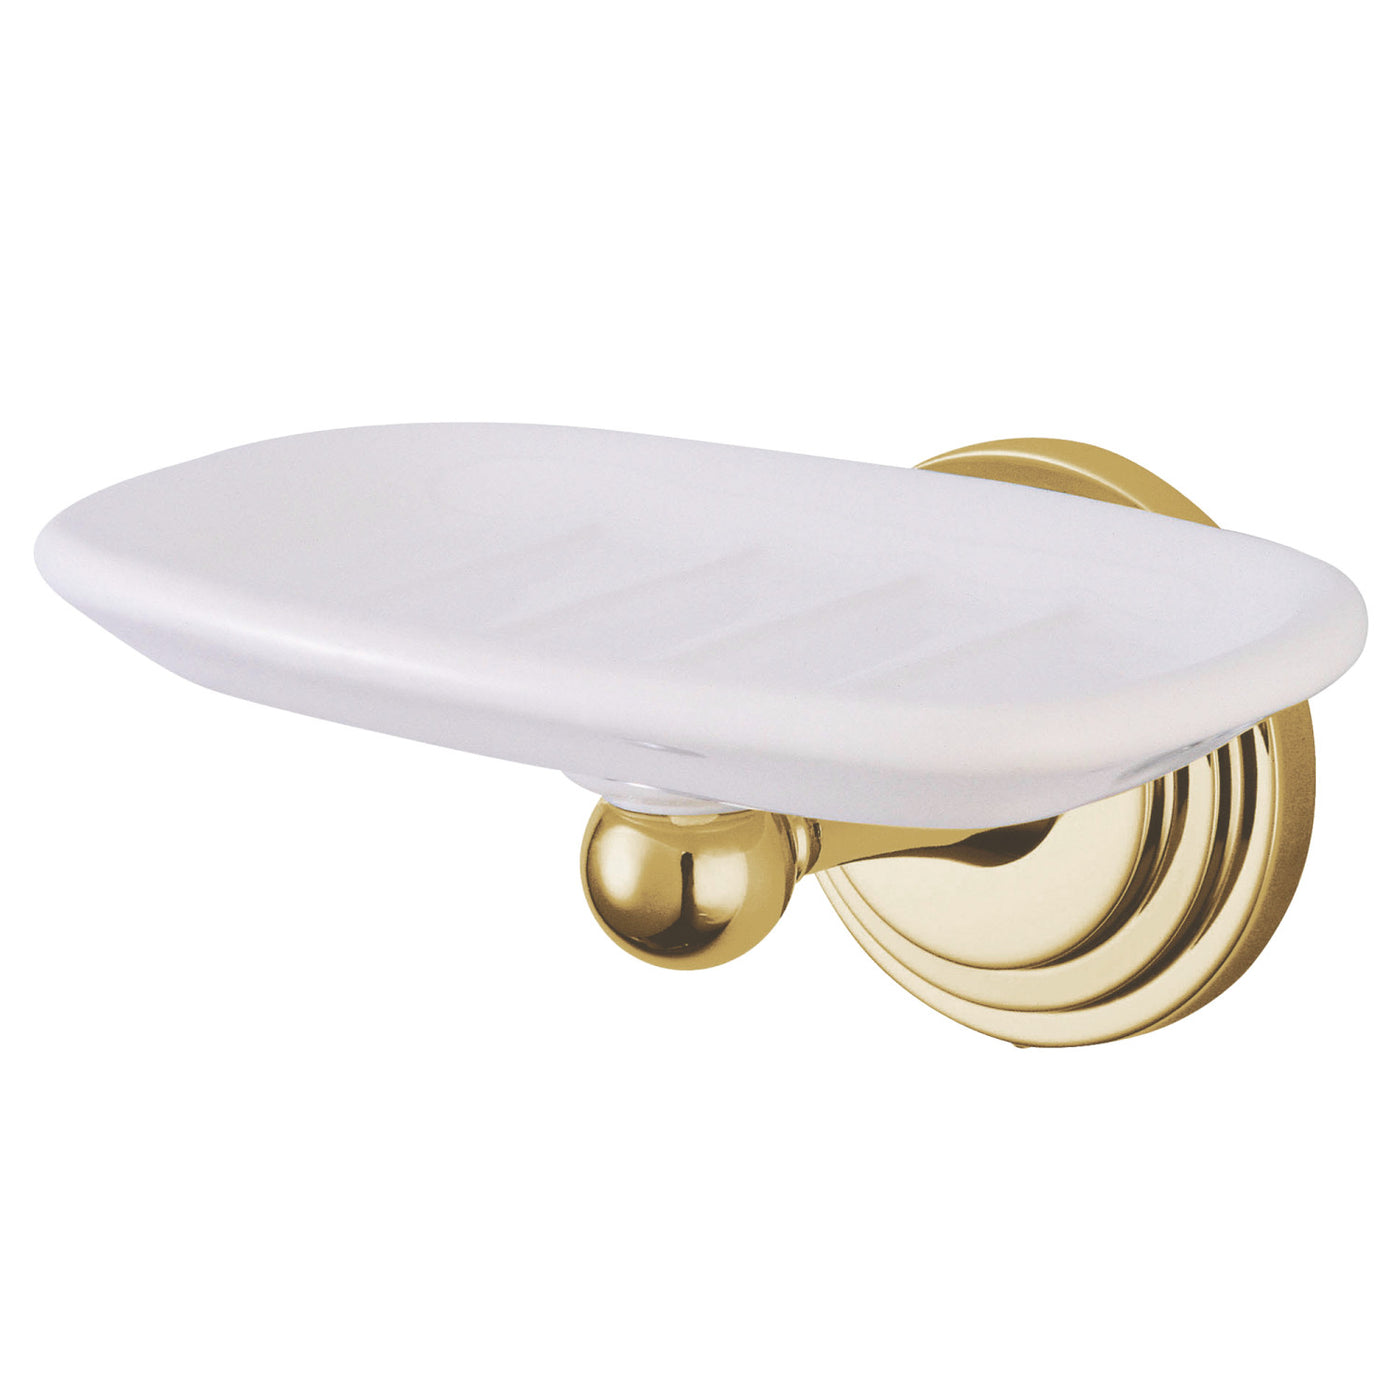 Elements of Design EBA2715PB Wall-Mount Soap Dish Holder, Polished Brass